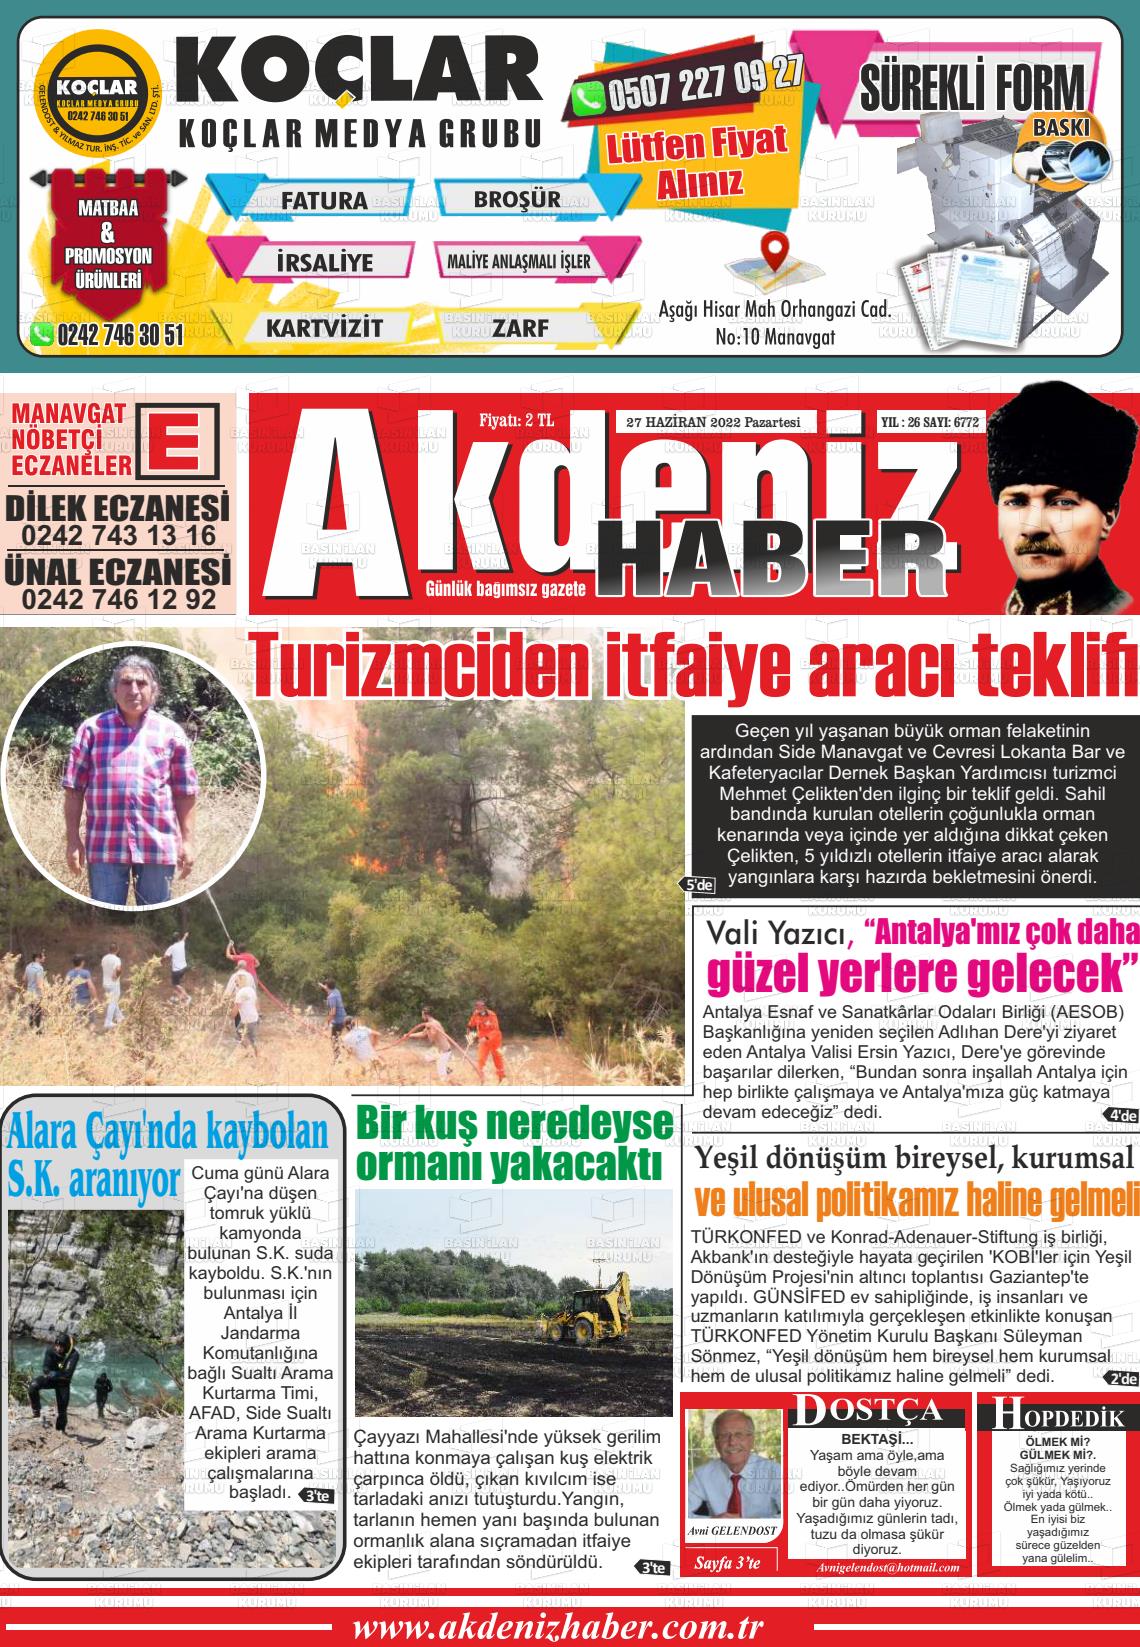 27 Haziran 2022 Akdeniz Haber Gazete Manşeti